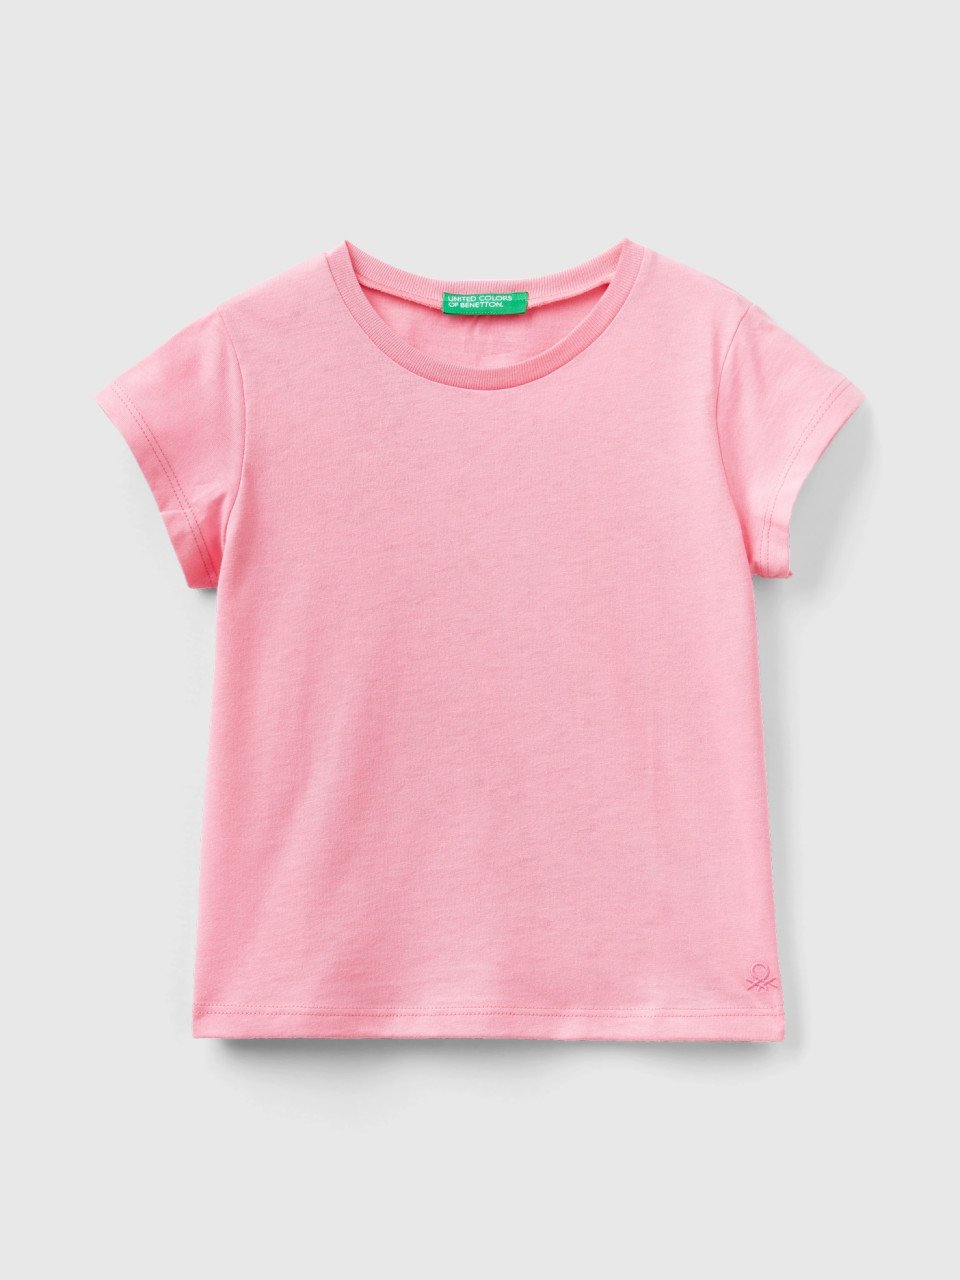 Benetton, 100% Organic Cotton T-shirt, Pink, Kids